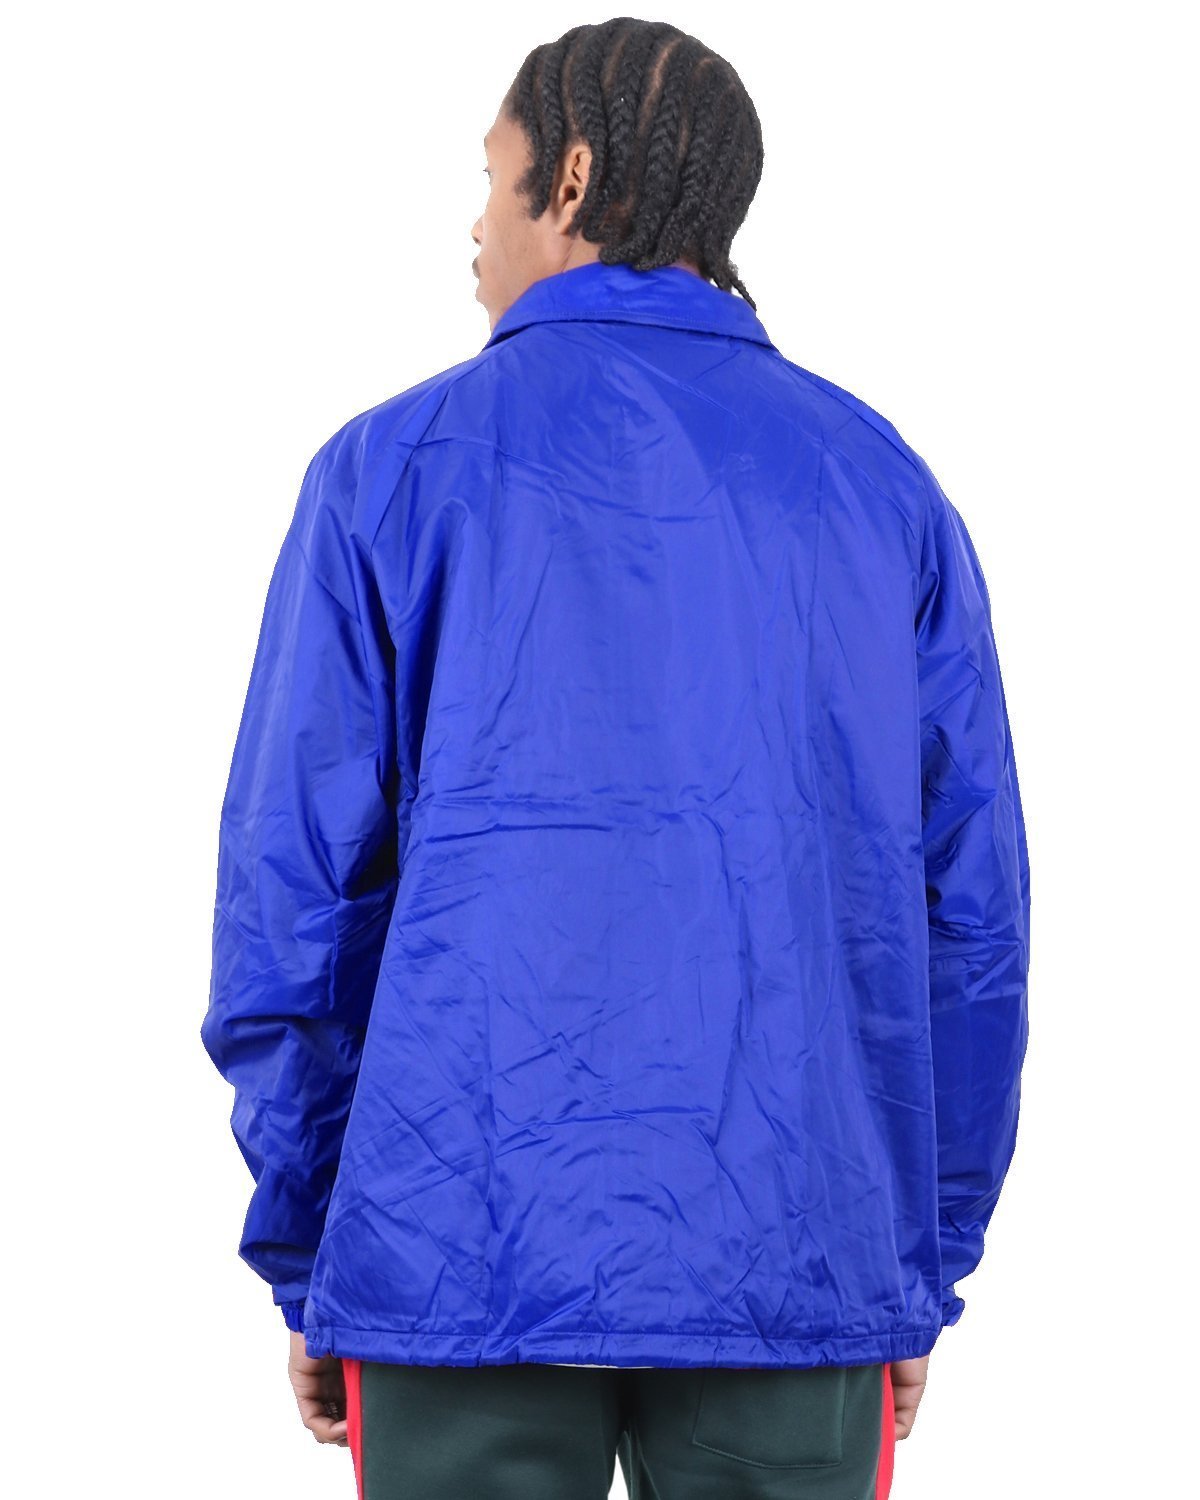 Jacket – Shakawear.com